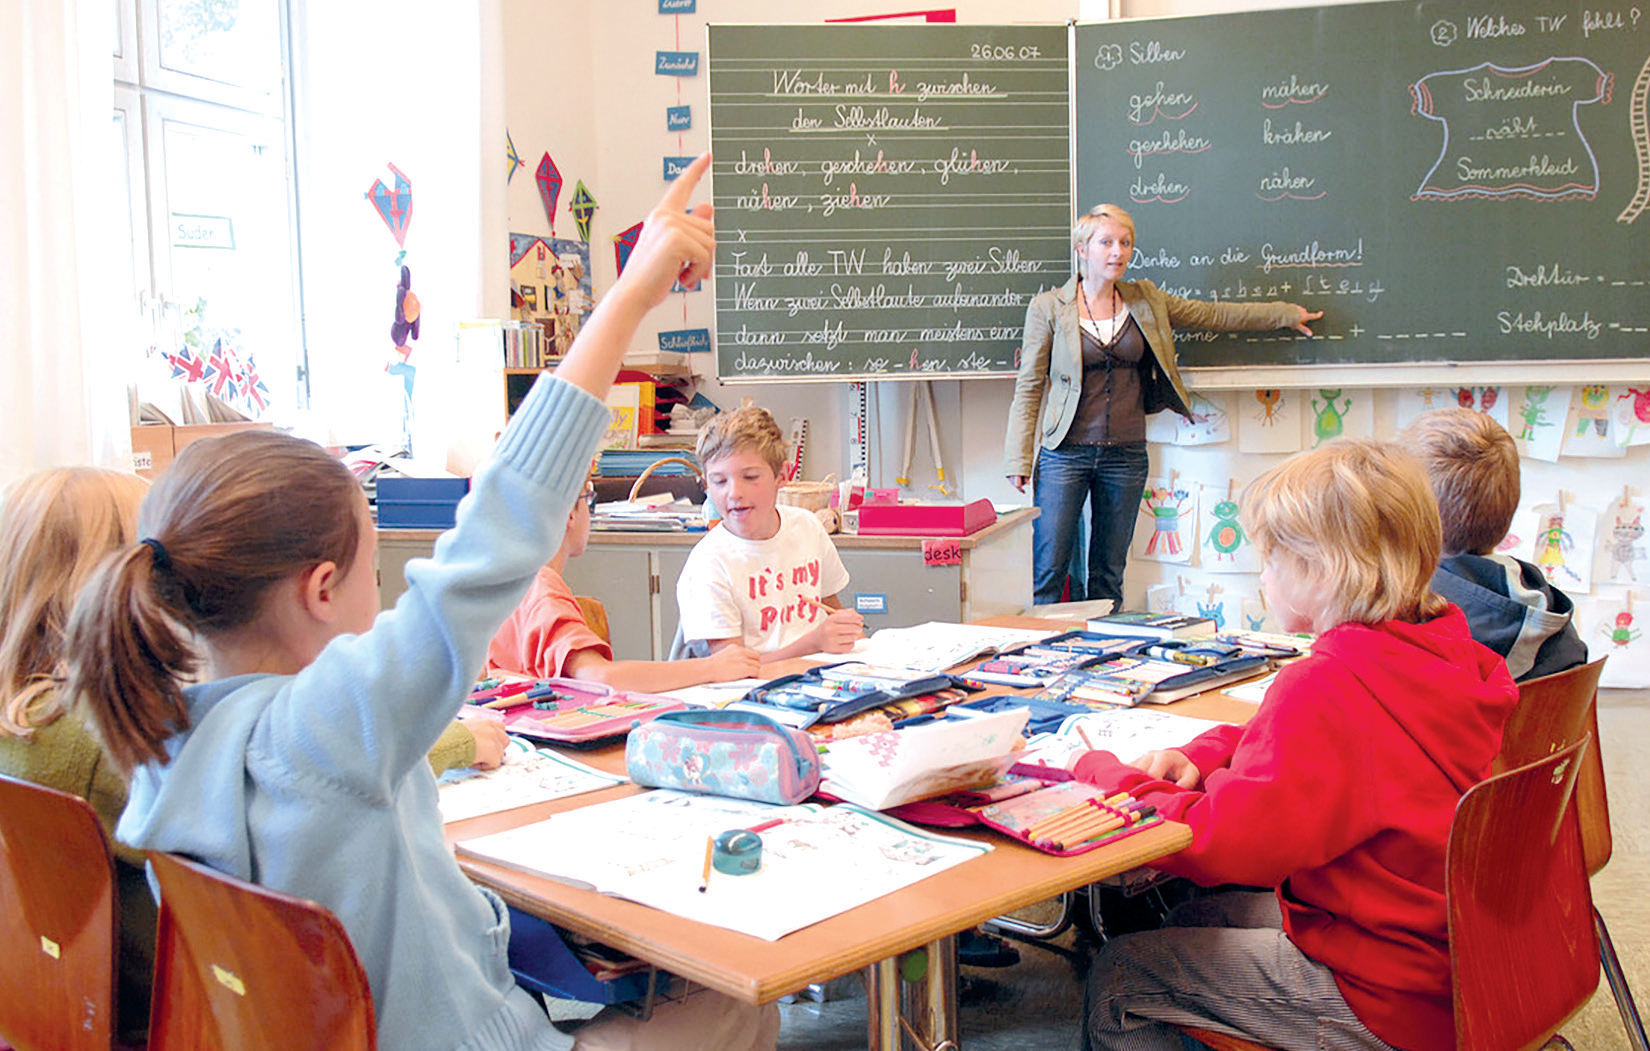 Школы в Германии Grundschule. Начальная школа в Германии Grundschule. Дети в немецкой школе. Дети в школе в Германии.